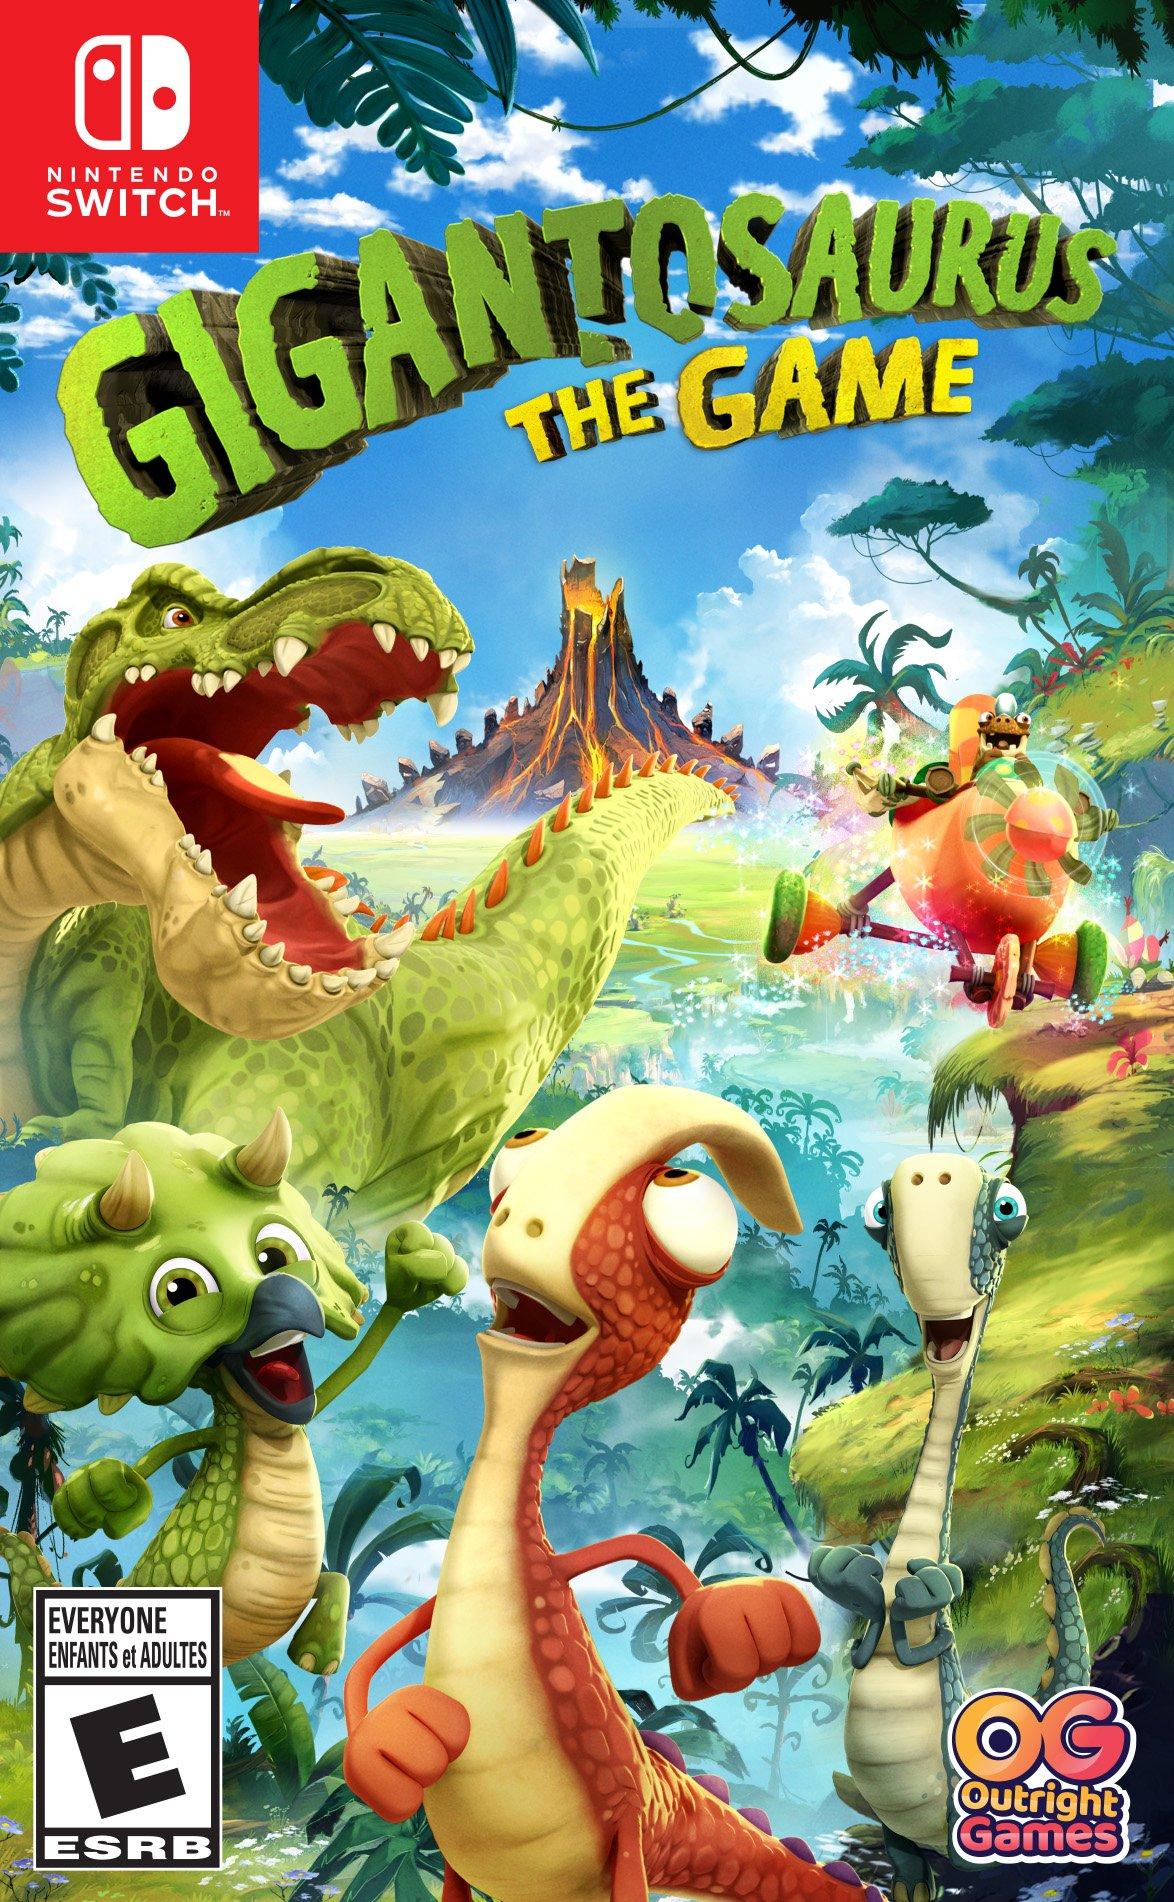 tekort lever gesprek Gigantosaurus The Game - Nintendo Switch | Nintendo Switch | GameStop